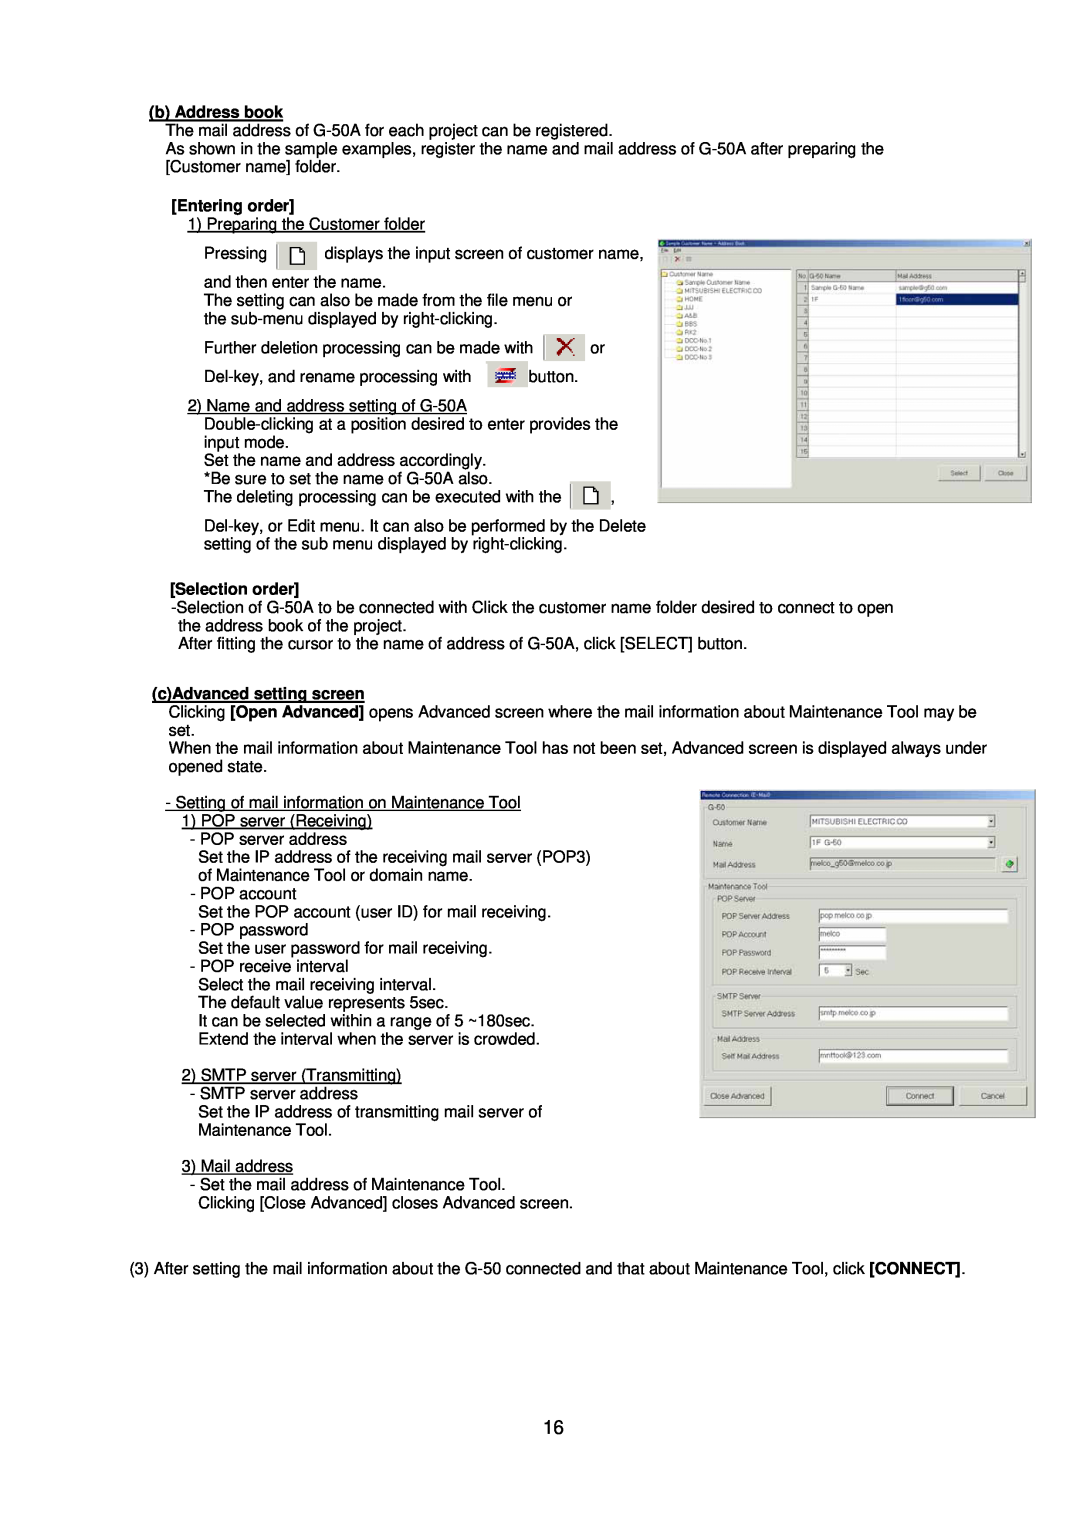 Mitsubishi MN Converter, G-50A manual b Address book, Entering order, Selection order, cAdvanced setting screen 